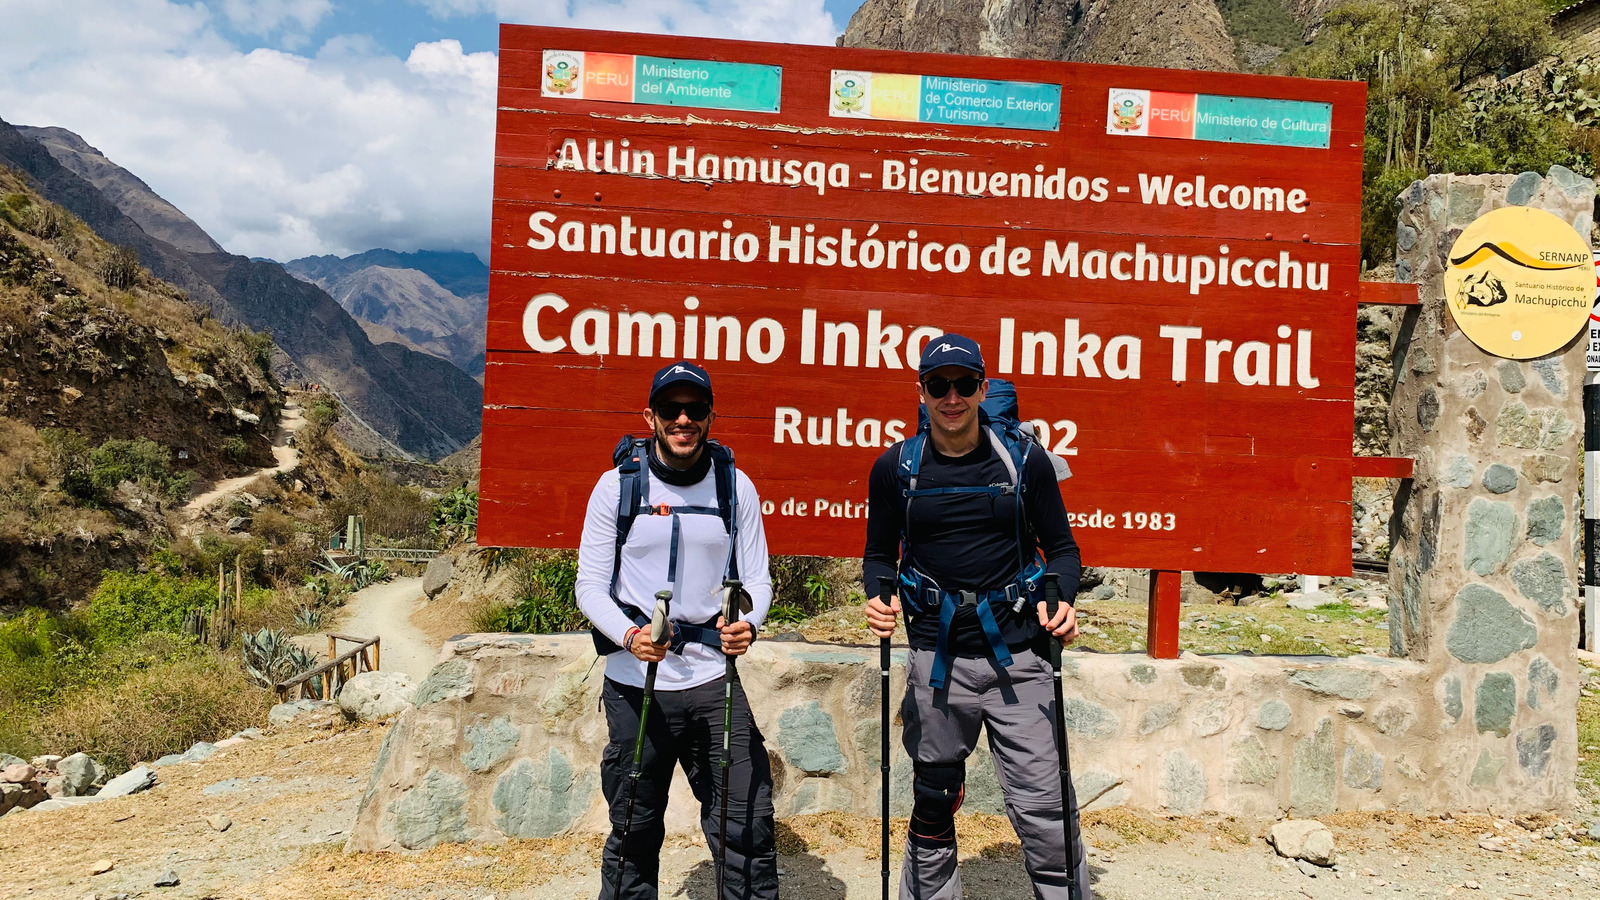 Inca Trail 4 days to Machu PicchuPhoto #1 